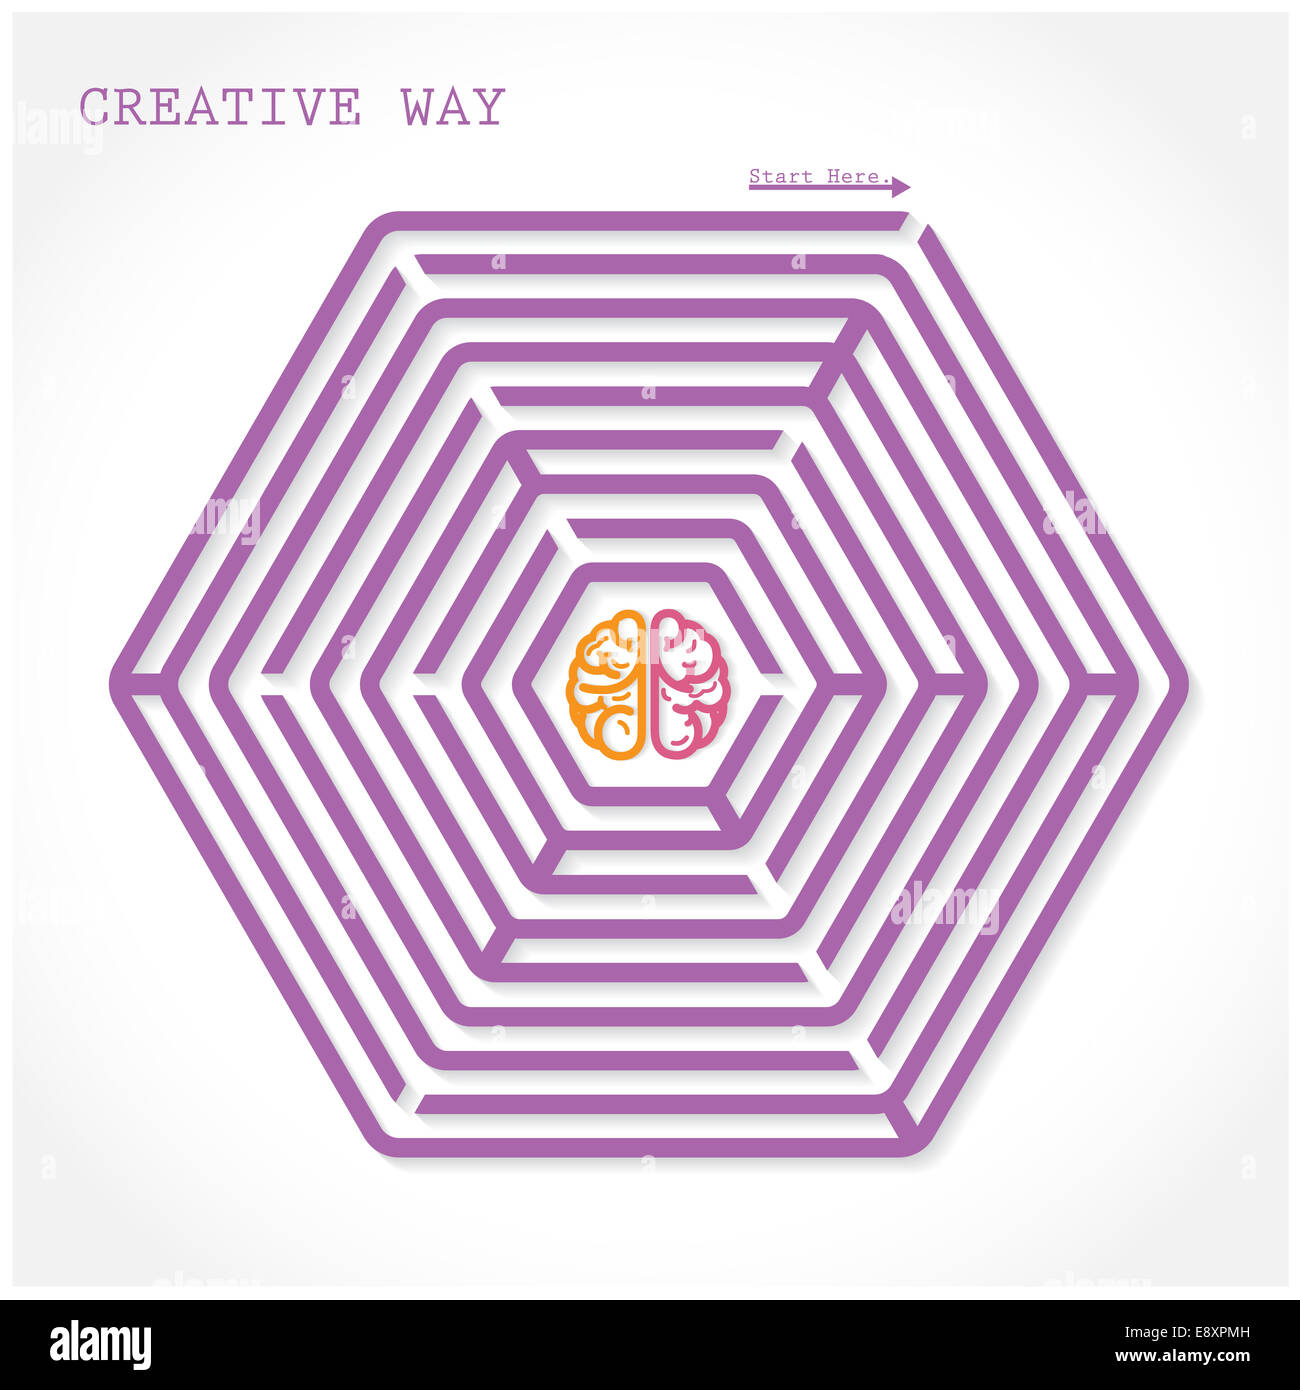 Creative hexagon maze way concept. Creative brain symbol  in the middle of hexagonal maze, education sign , business ideas. Stock Photo